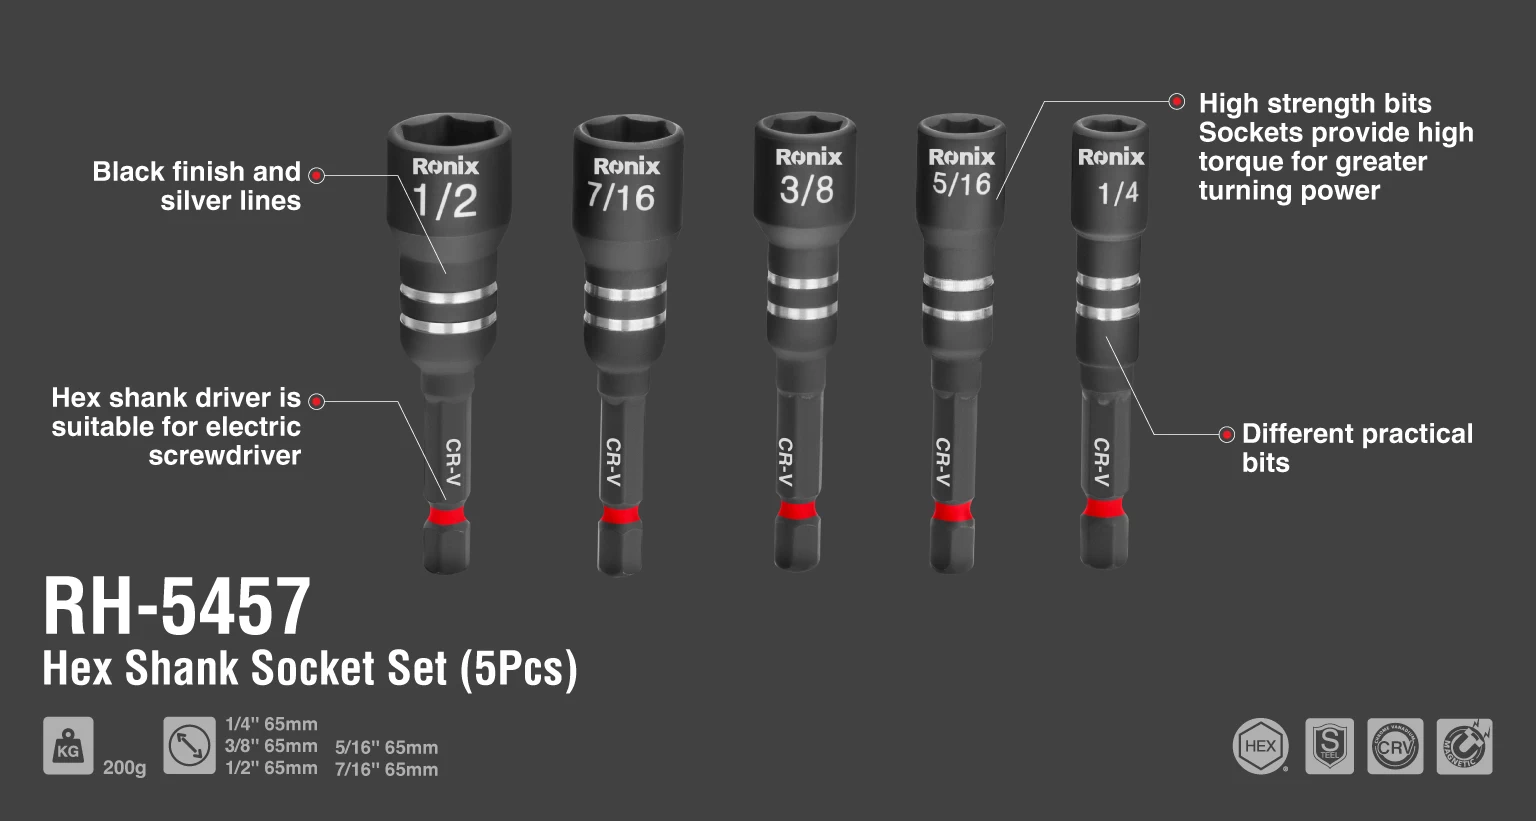 5Pcs Hex shank socket set_details